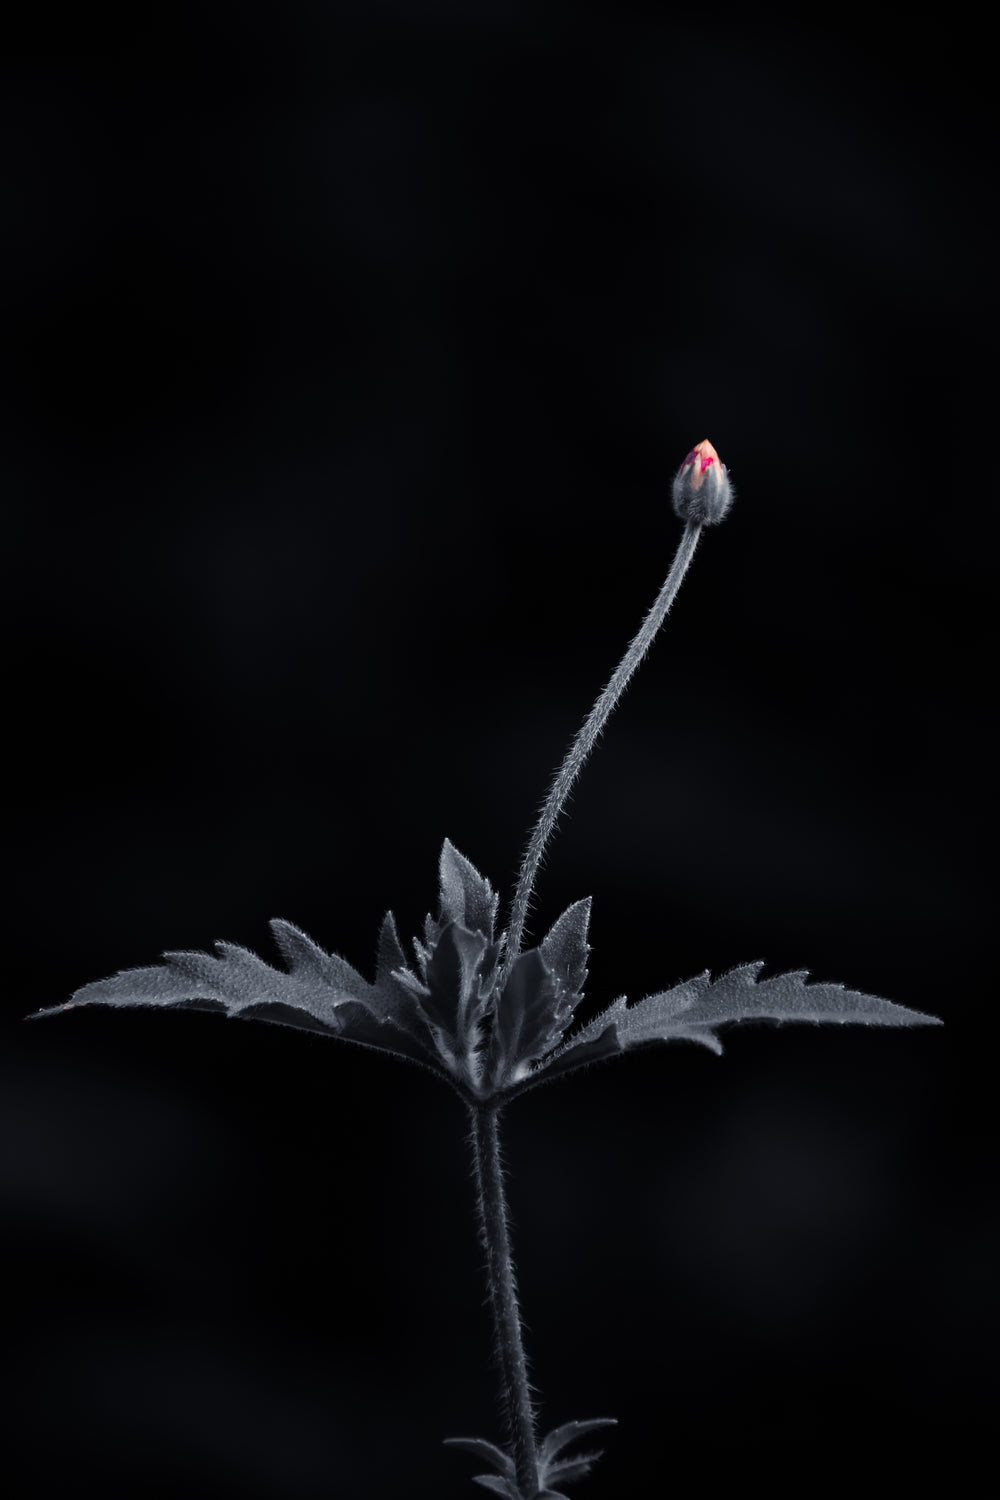 grey flower stem with a soft pink flower bud